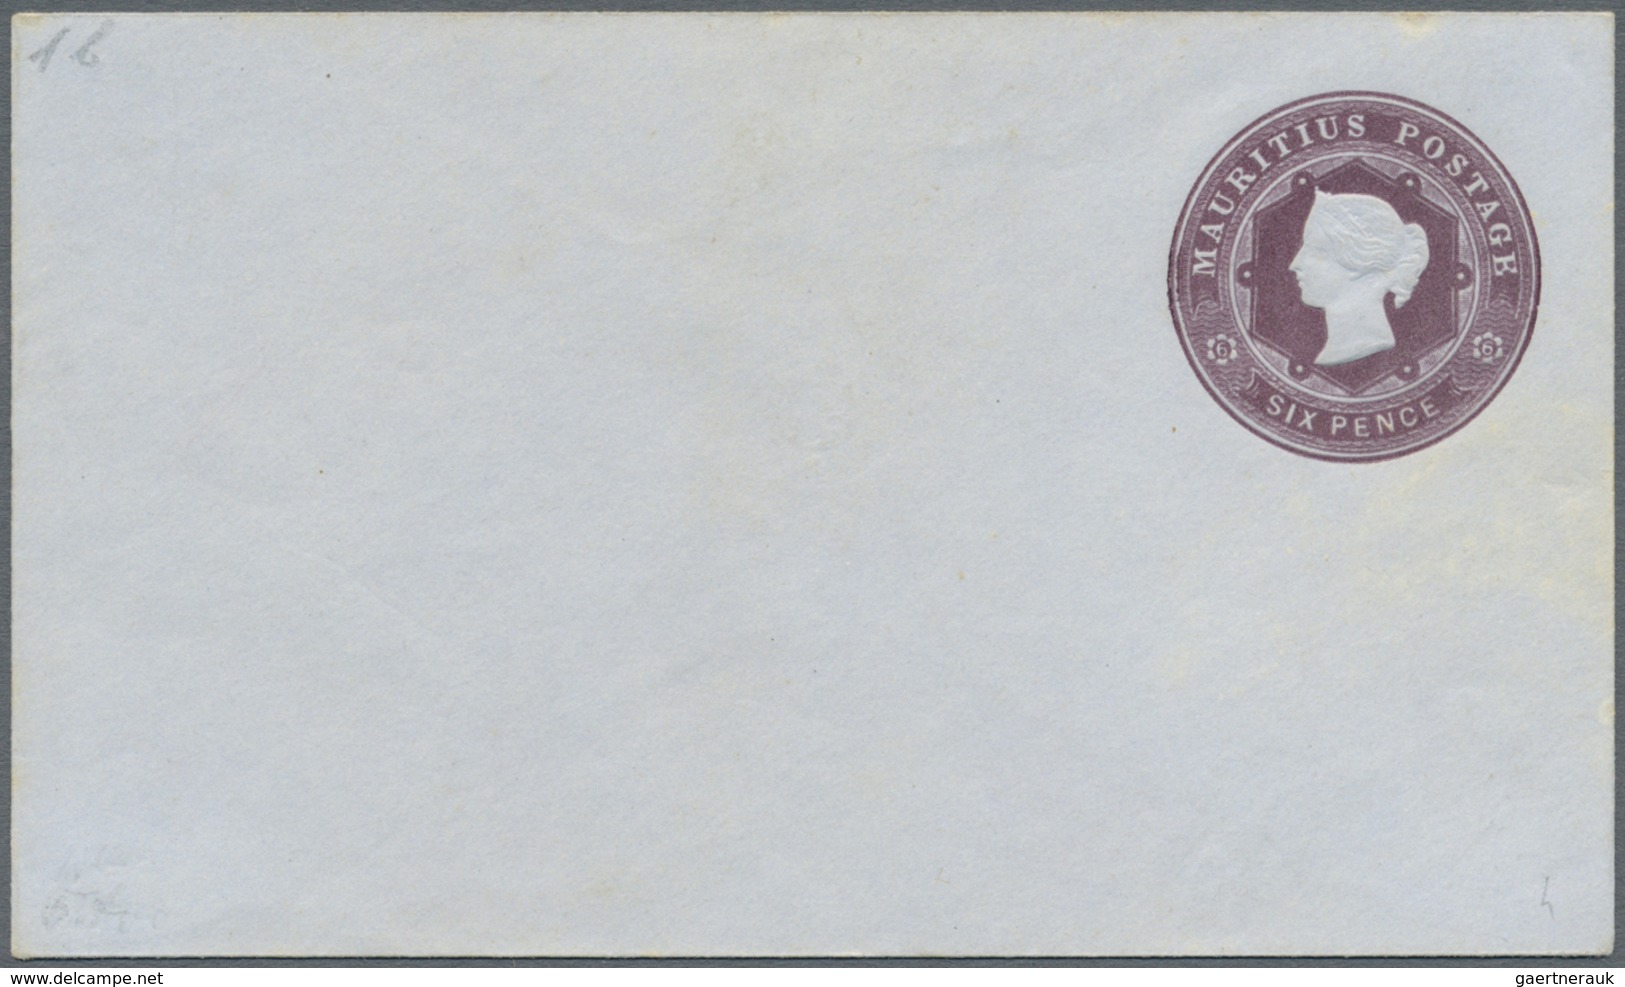 GA Mauritius: 1862, QV stationery envelopes (5): 6d (3, HG1a x2, 3d), 9d (2, HG 2, 2a) plus 6d (HG1) ov